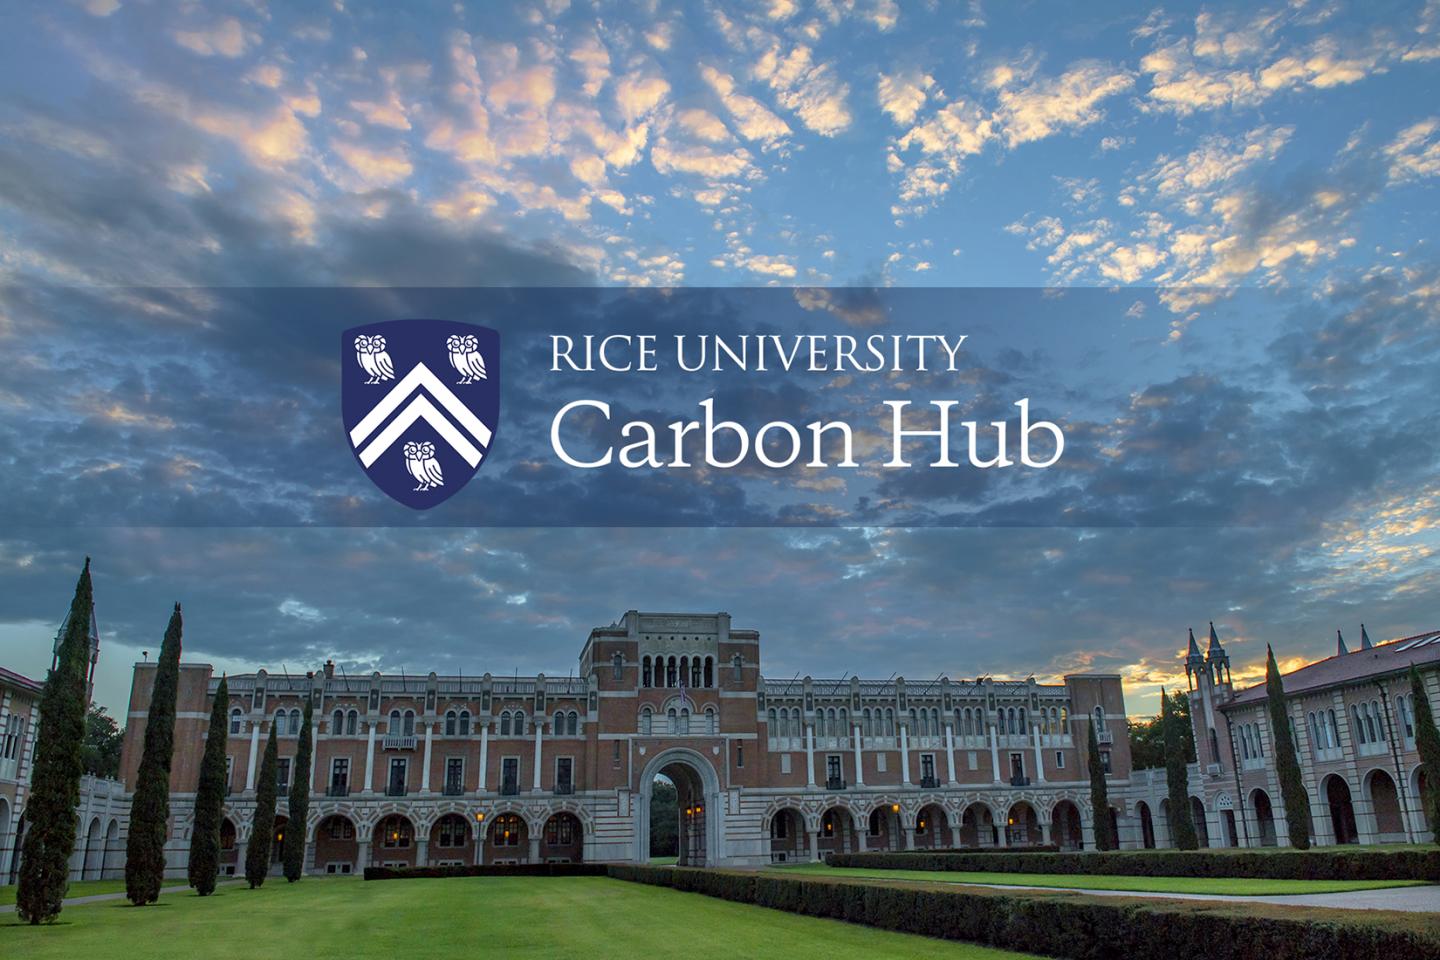 Rice University's Carbon Hub